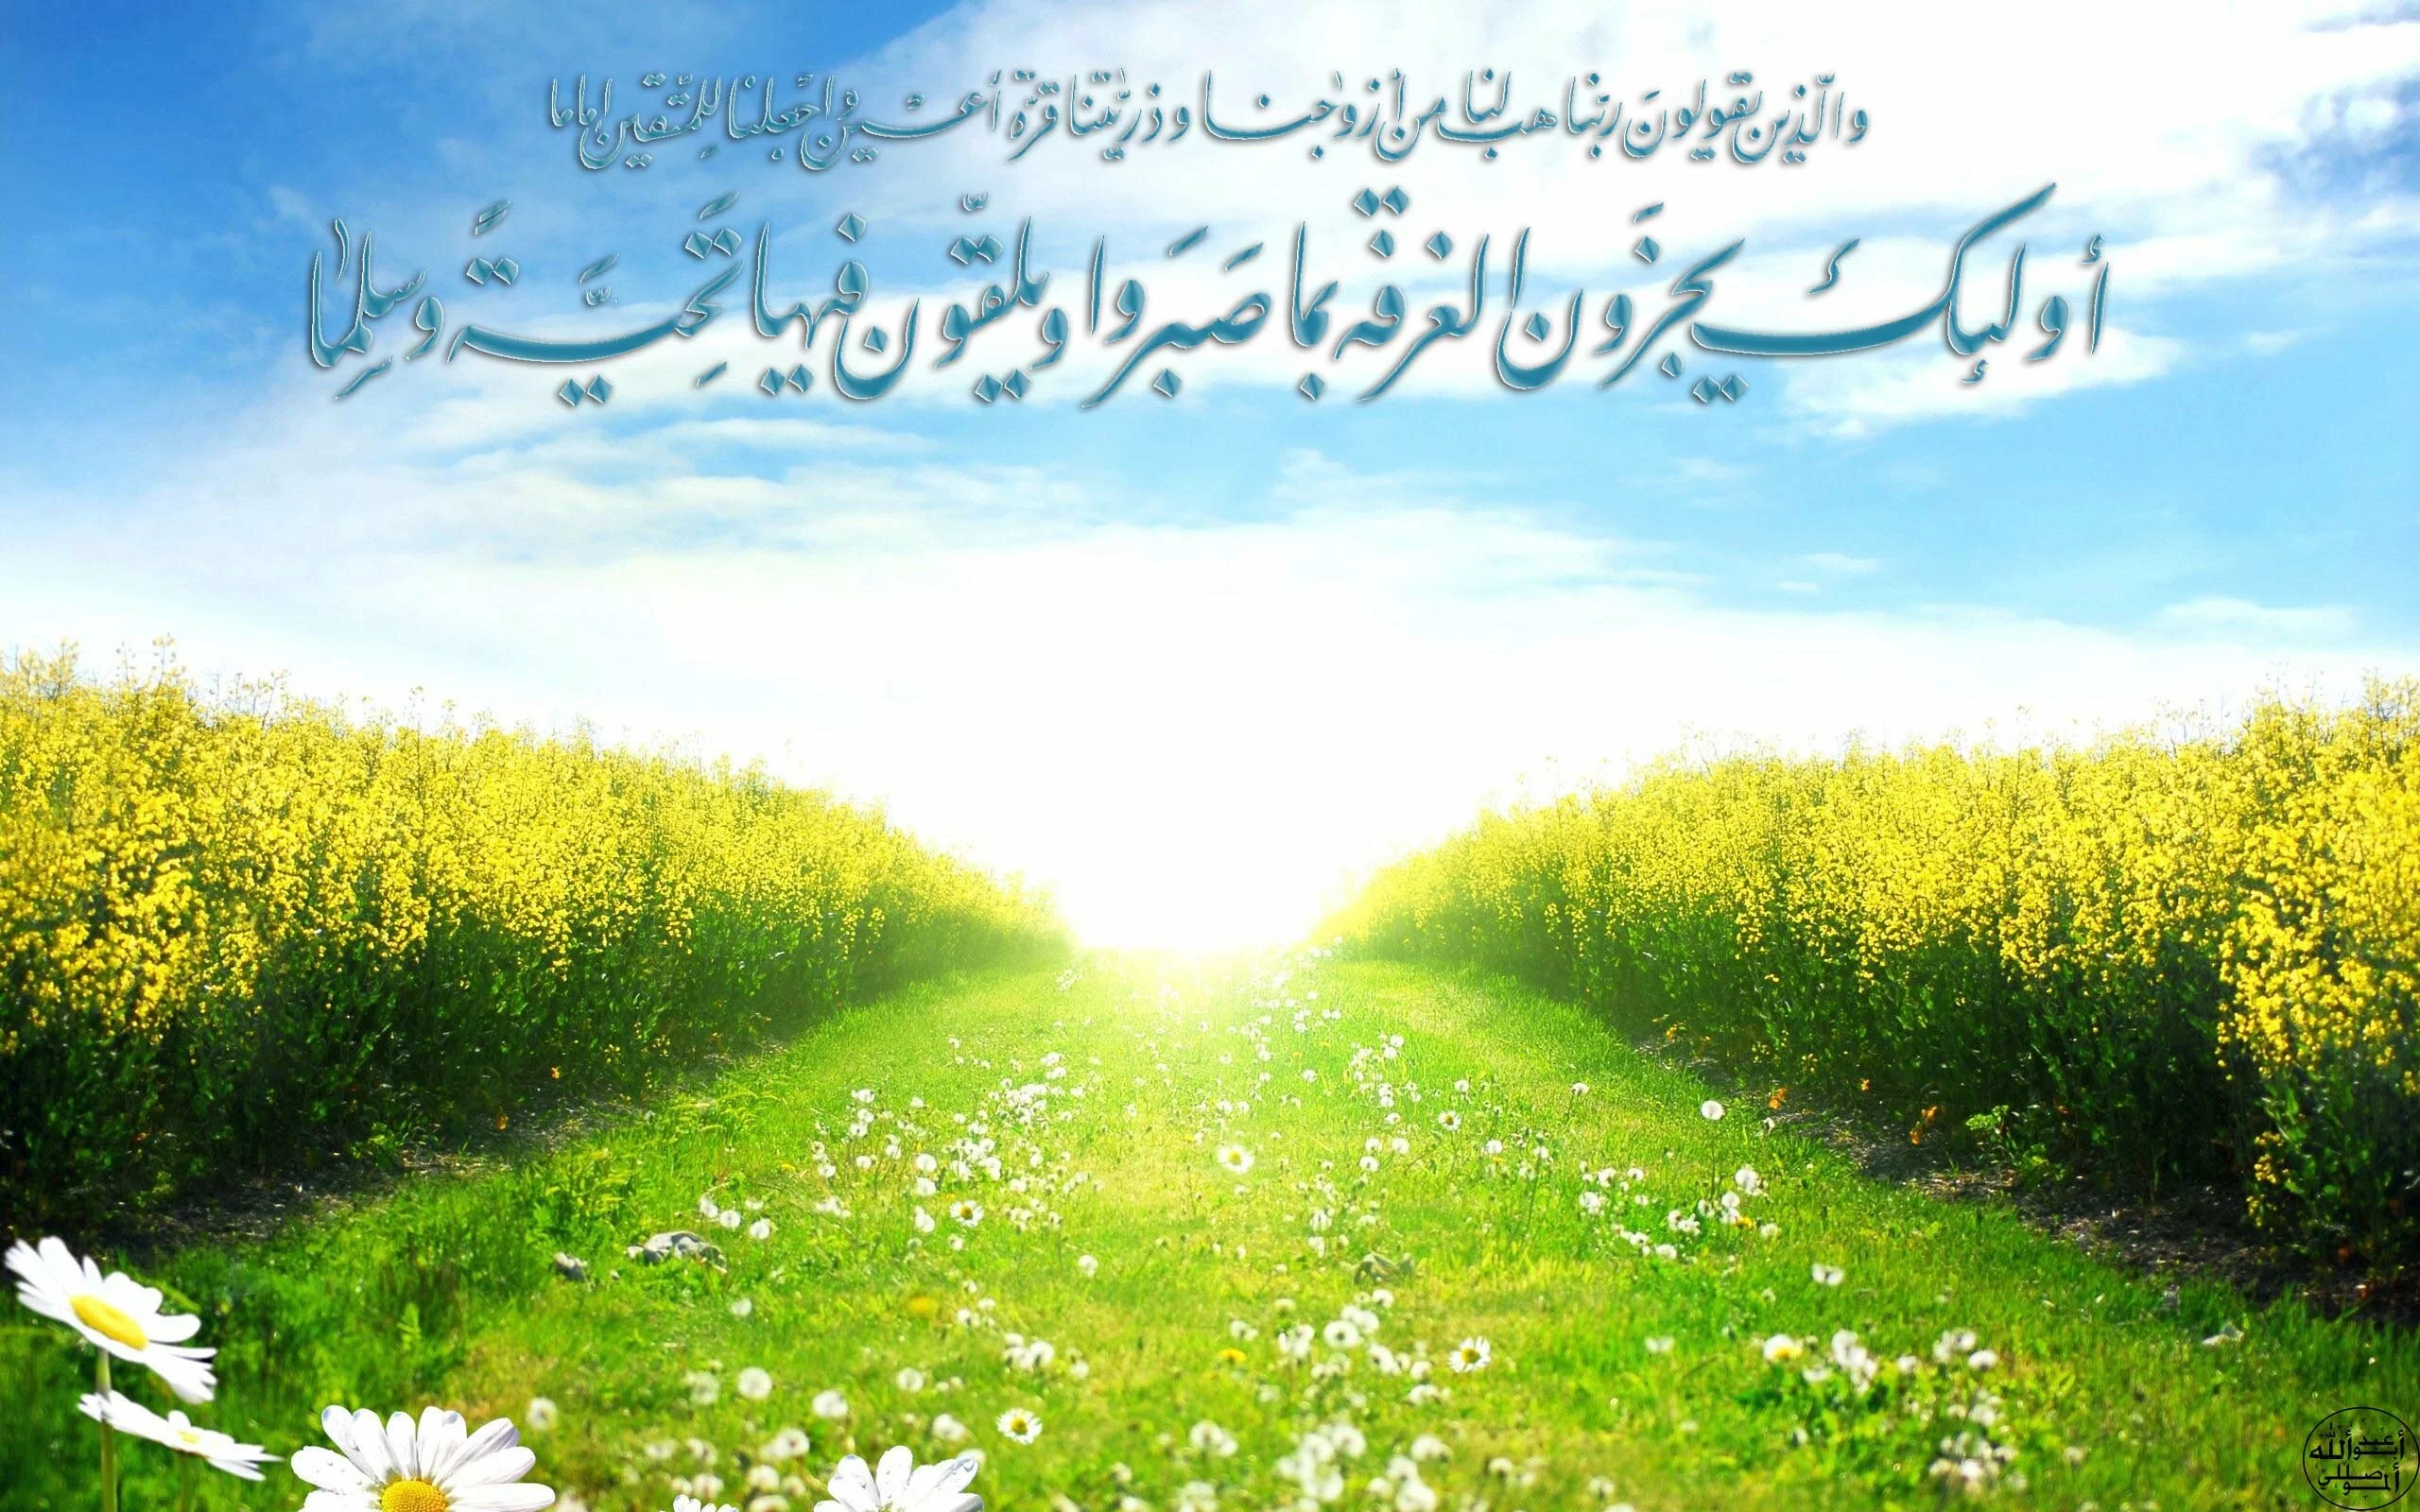 Quran Ayaah in Flower Islamic Wallpaper Quran Ayaah in Flower Islamic Wallpaper